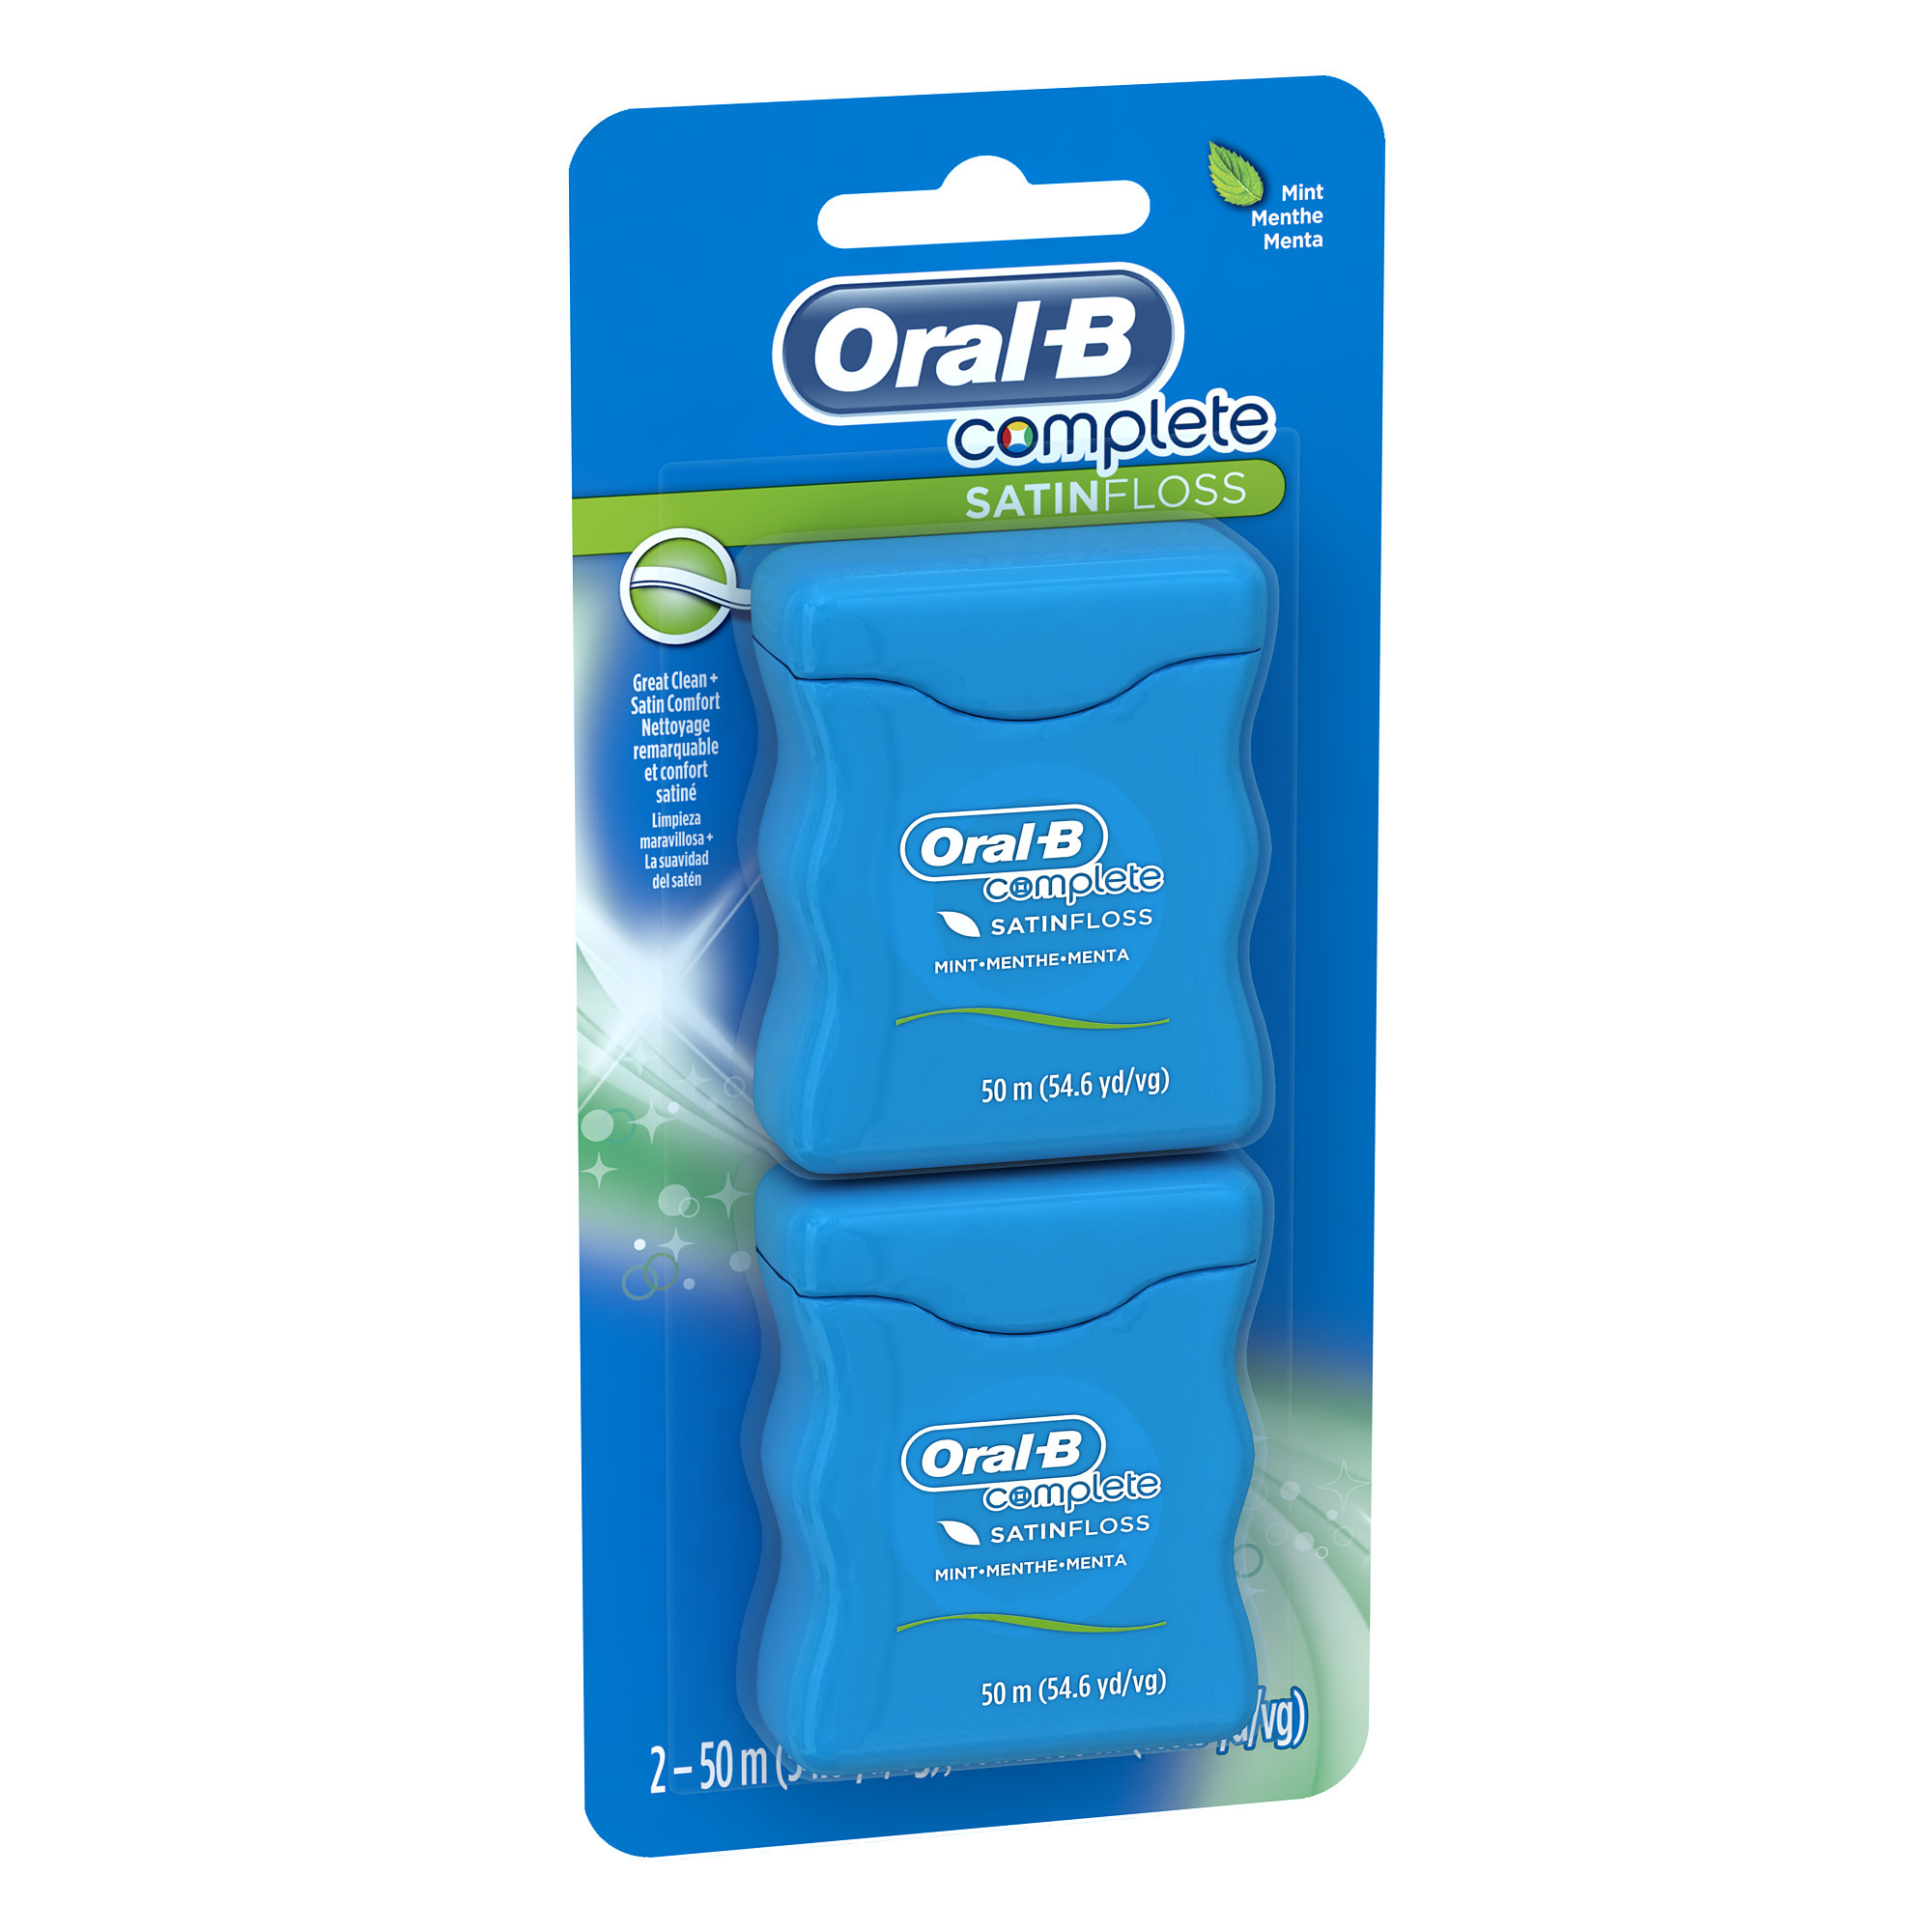 Oral-B Complete Satin Ribbon Dental Floss, Mint, 50 m, 2 Pk - image 4 of 5